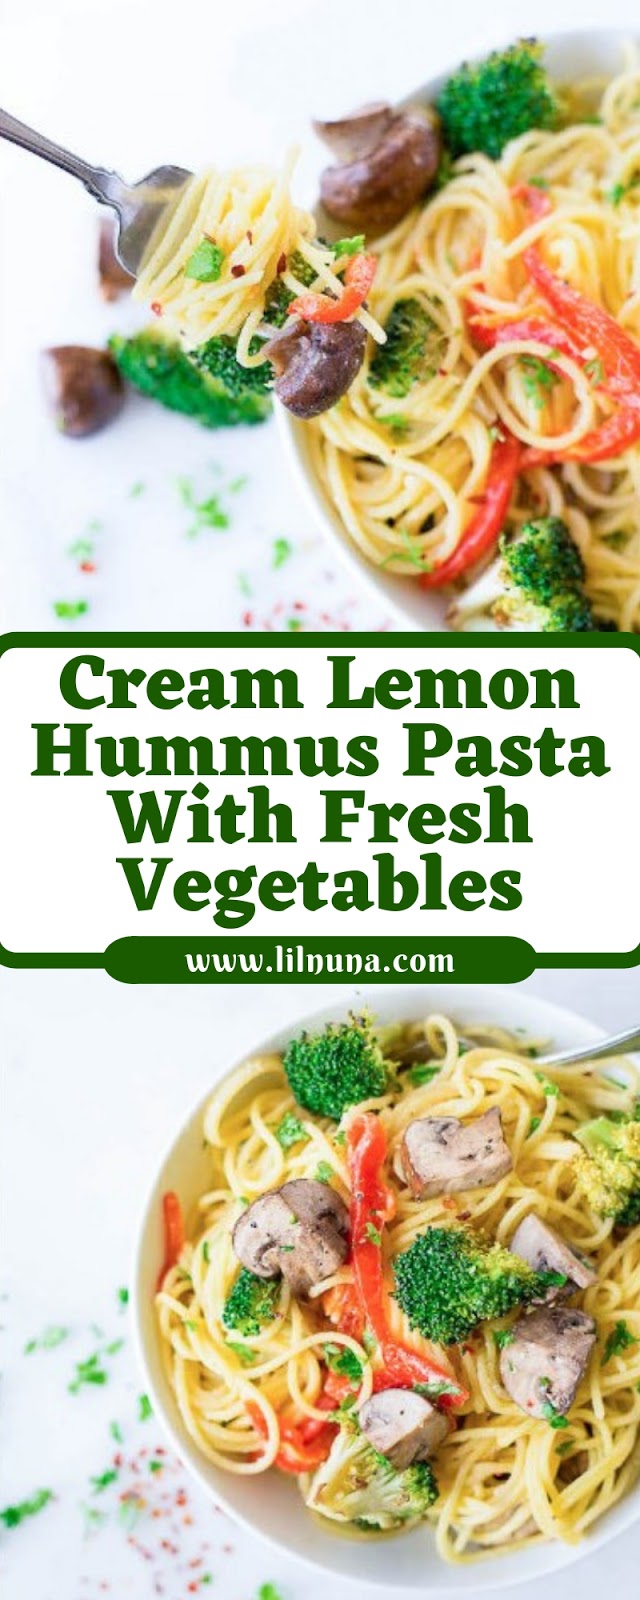 Cream Lemon Hummus Pasta With Fresh Vegetables